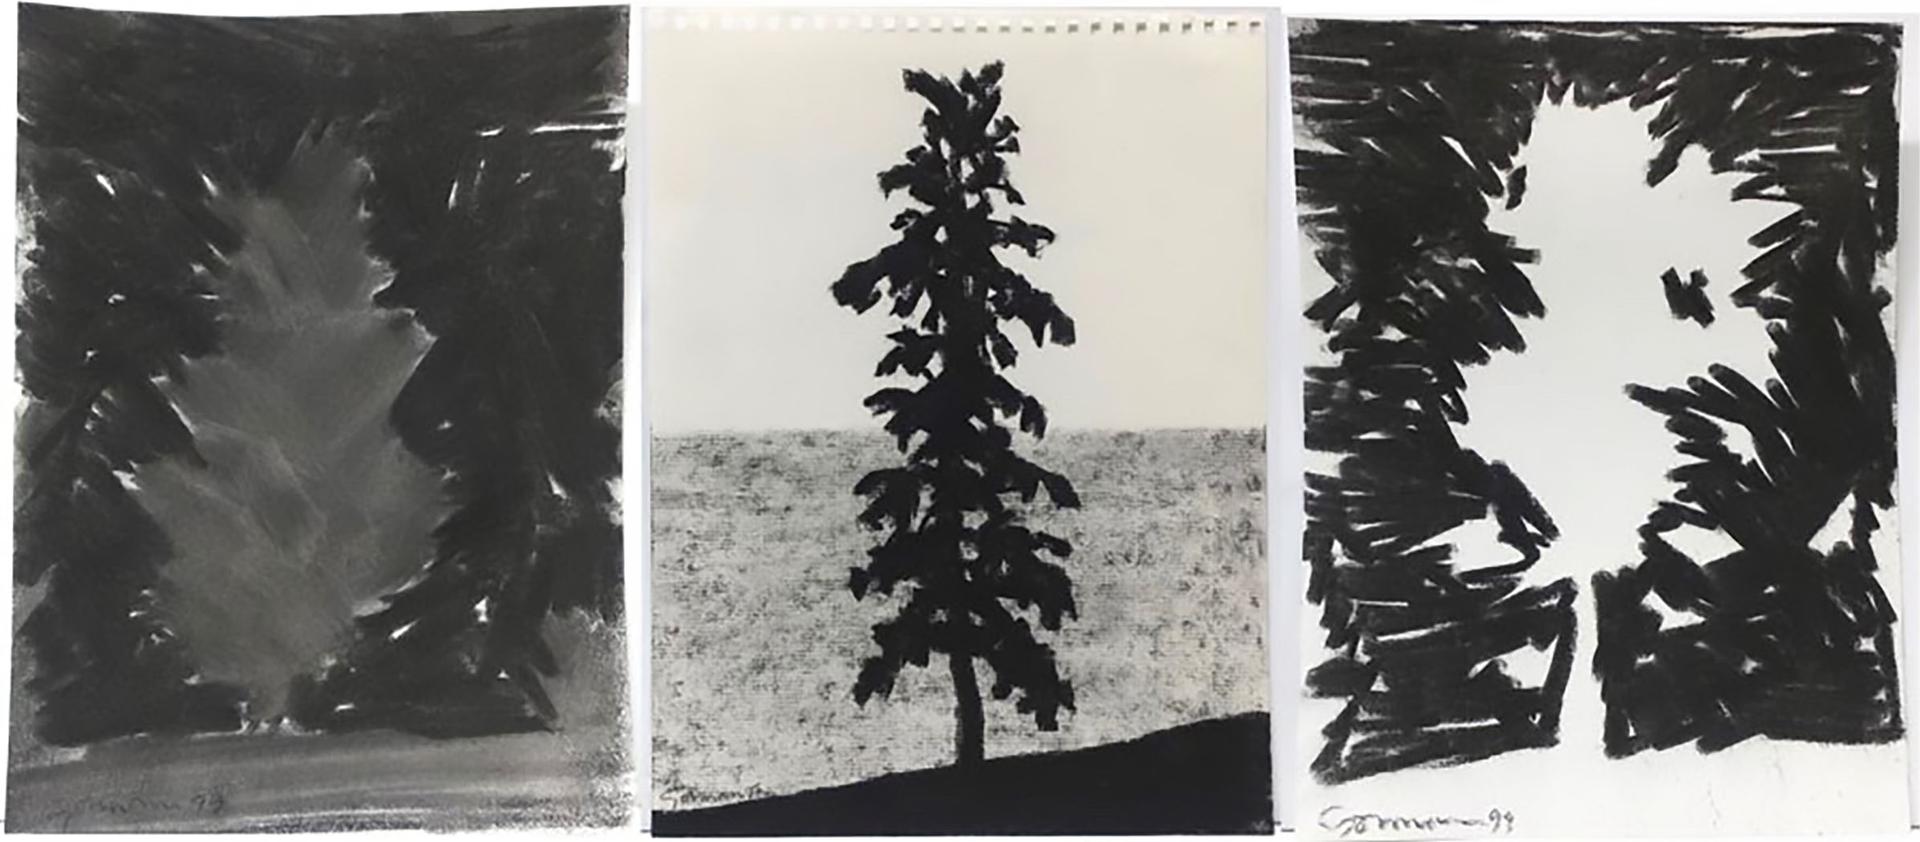 Richard Borthwick Gorman (1935-2010) - Untitled (Tree Studies)